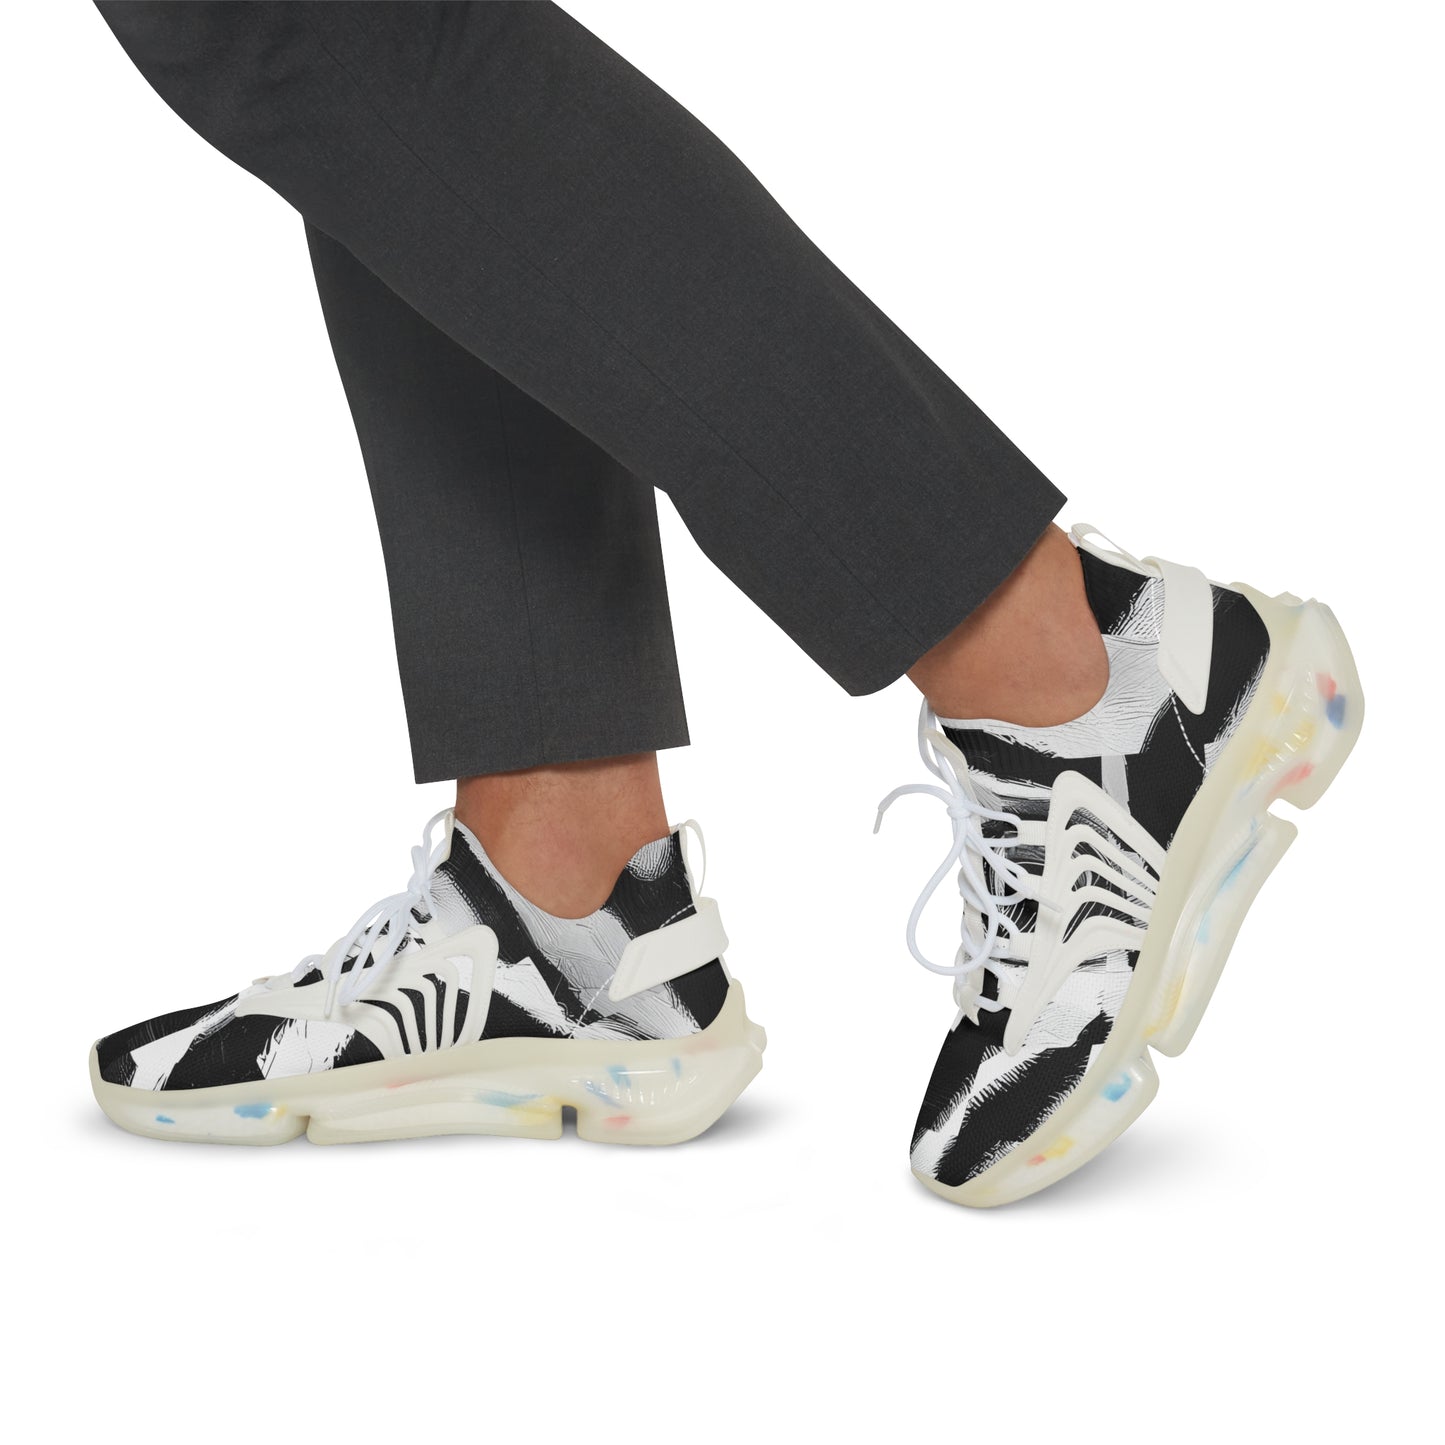 All Over Print Zebra Men's Mesh Sneakers - Mens Fashion Sneakers